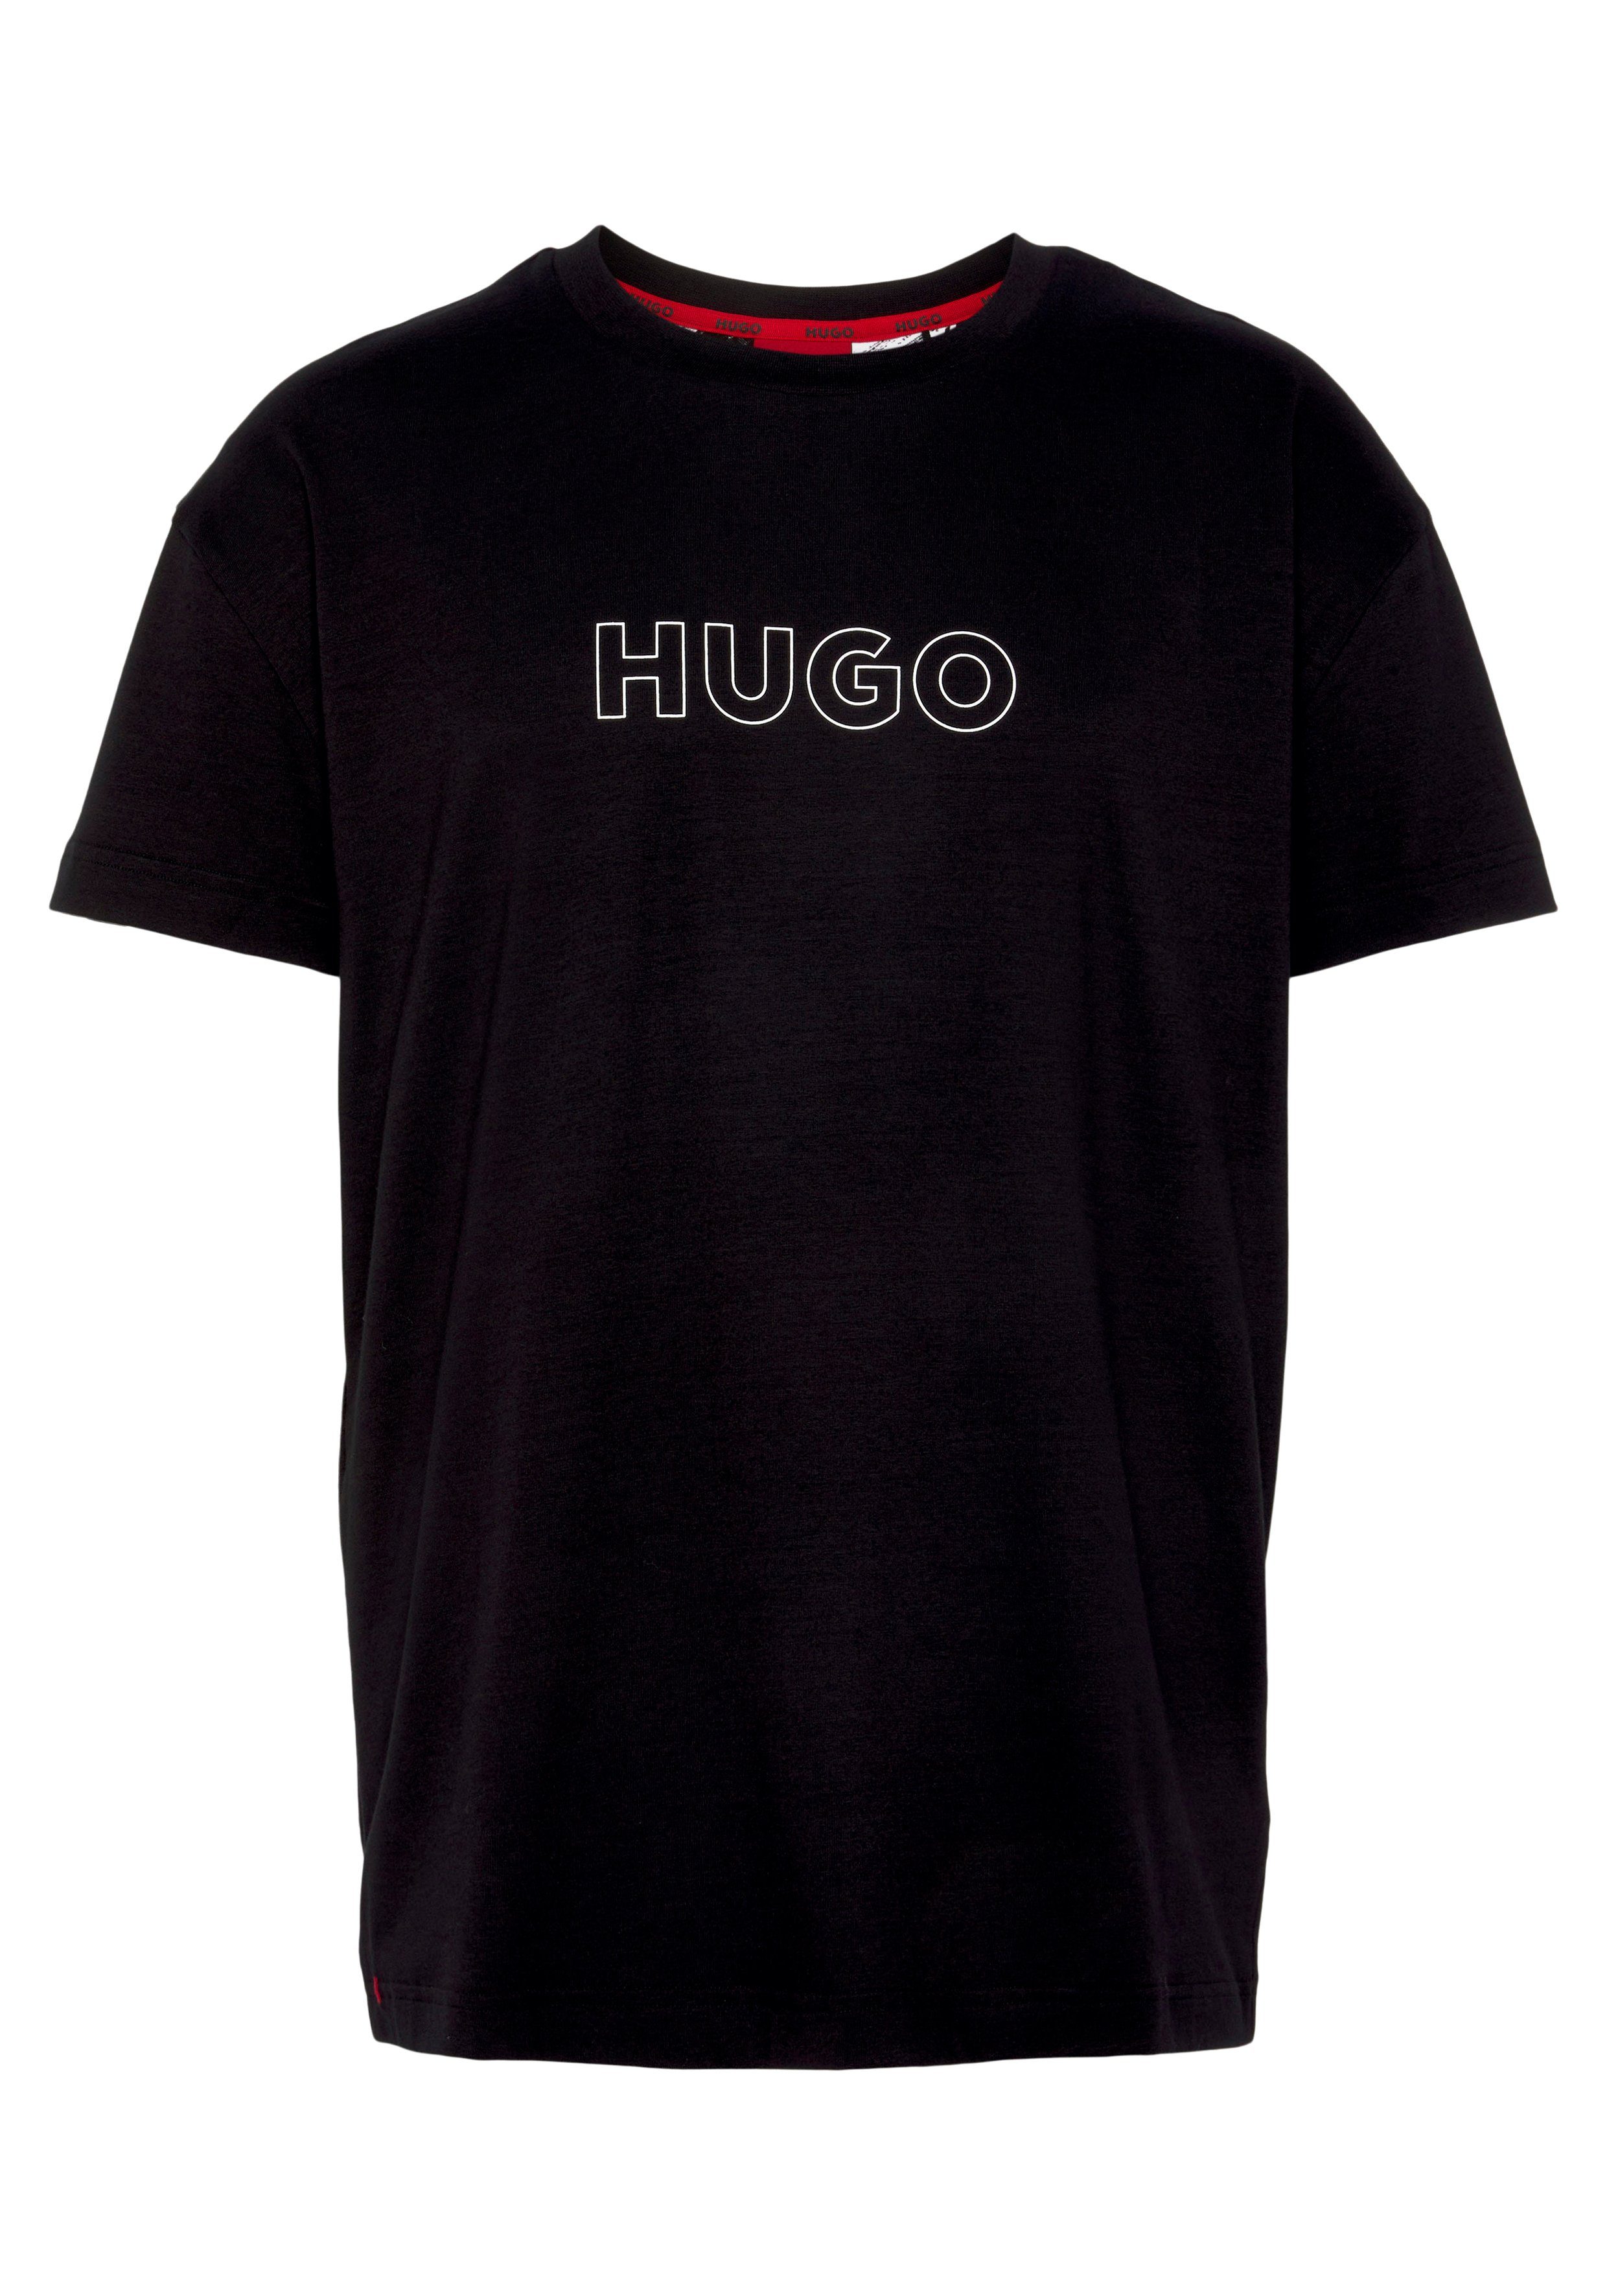 HUGO T-Shirt Brush Logo T-Shirt mit HUGO auf Print der Brust